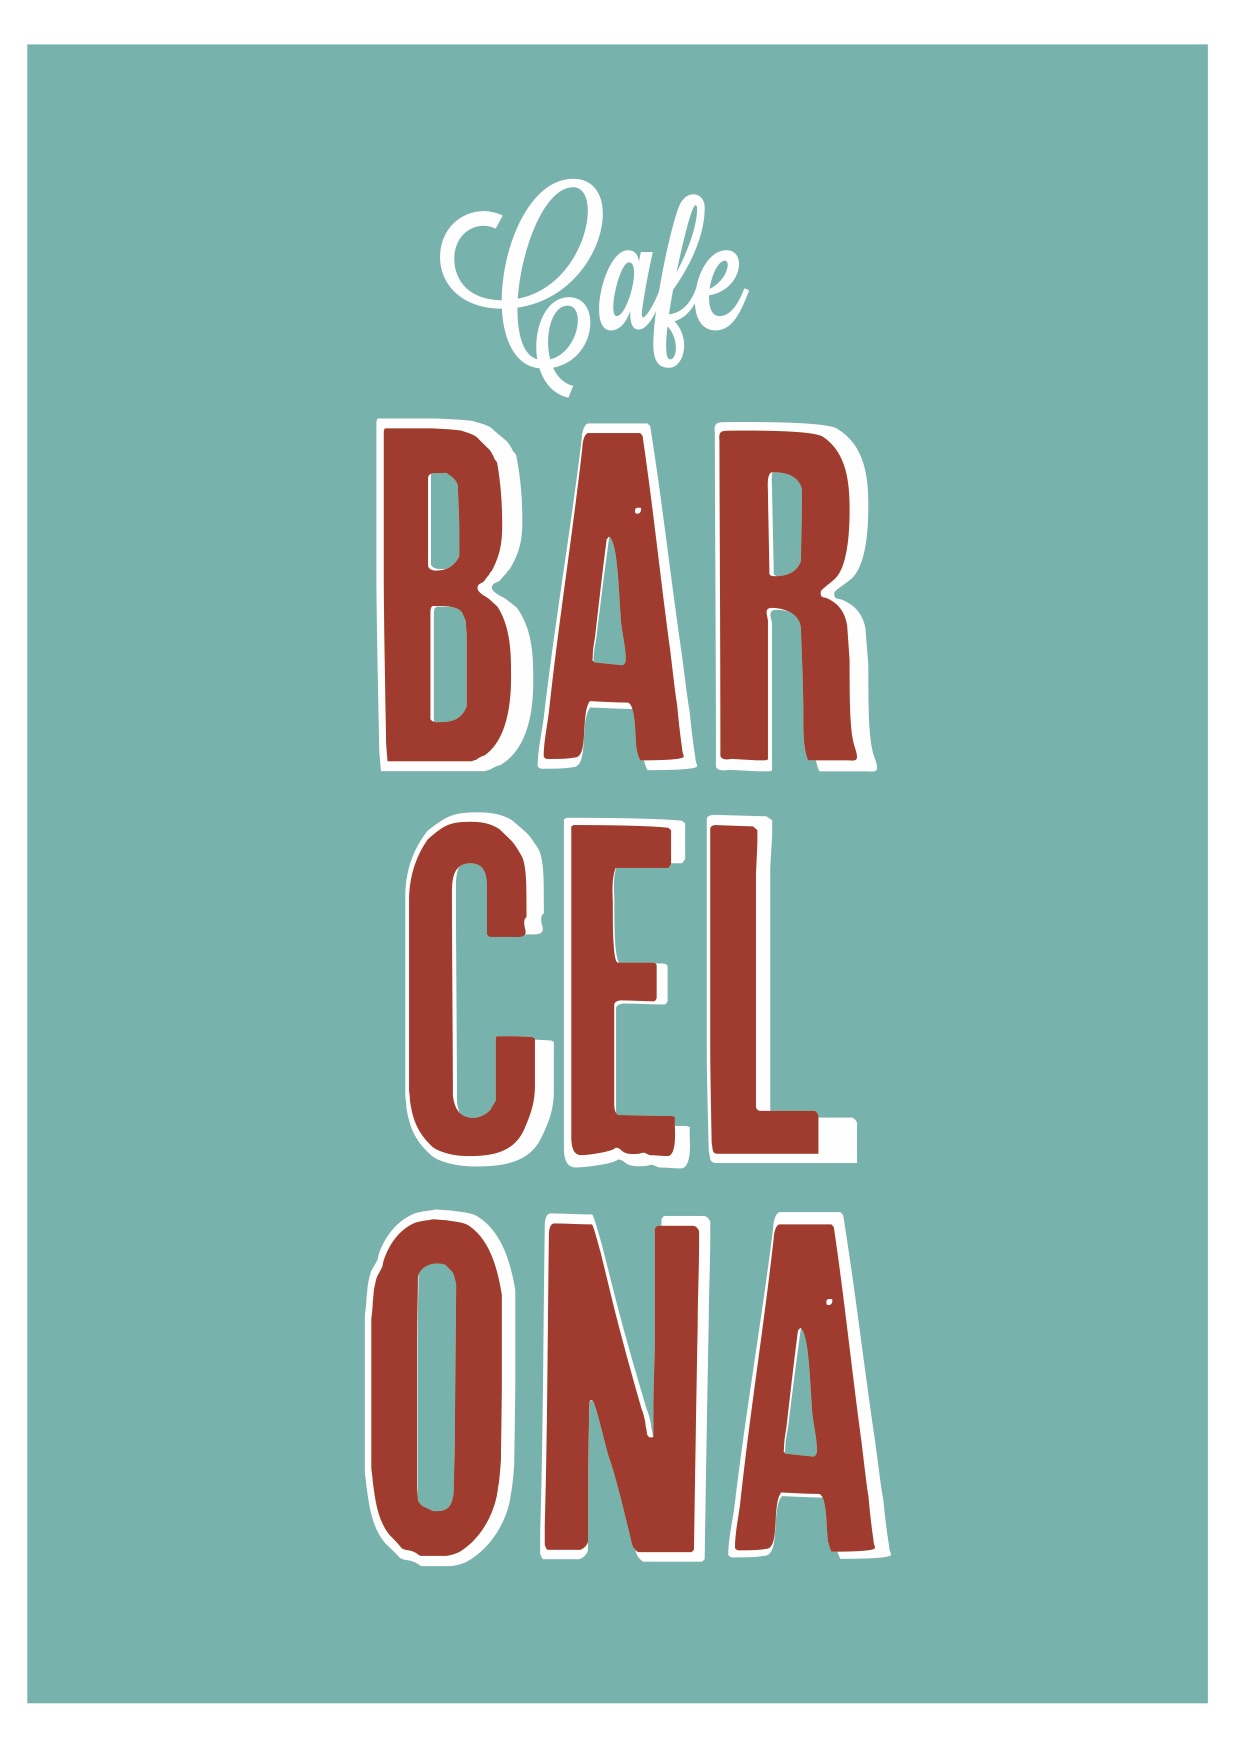 cafe barcelona streatham london